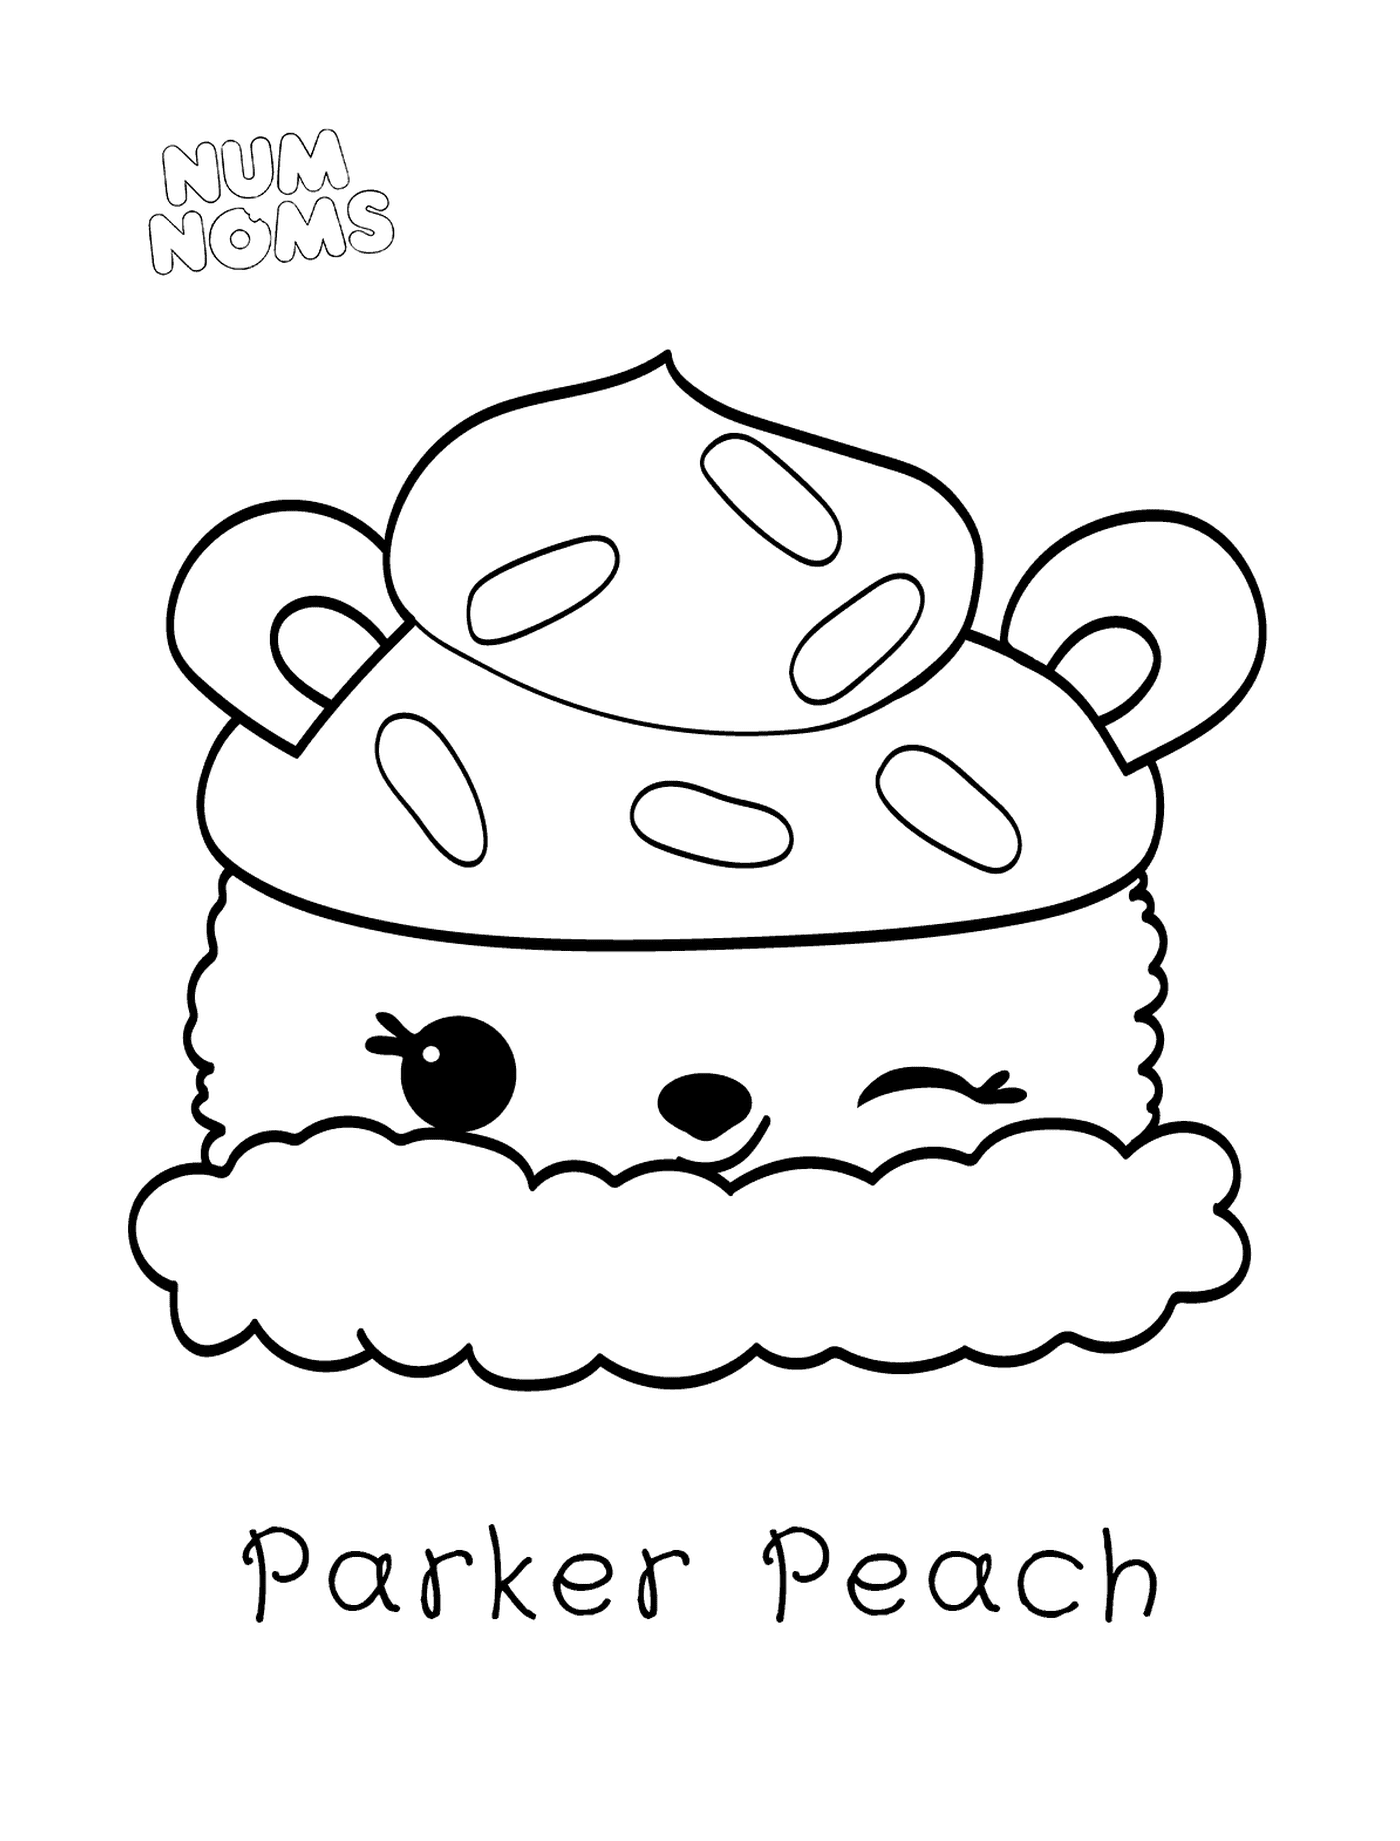  Parker Peach di nome Num 